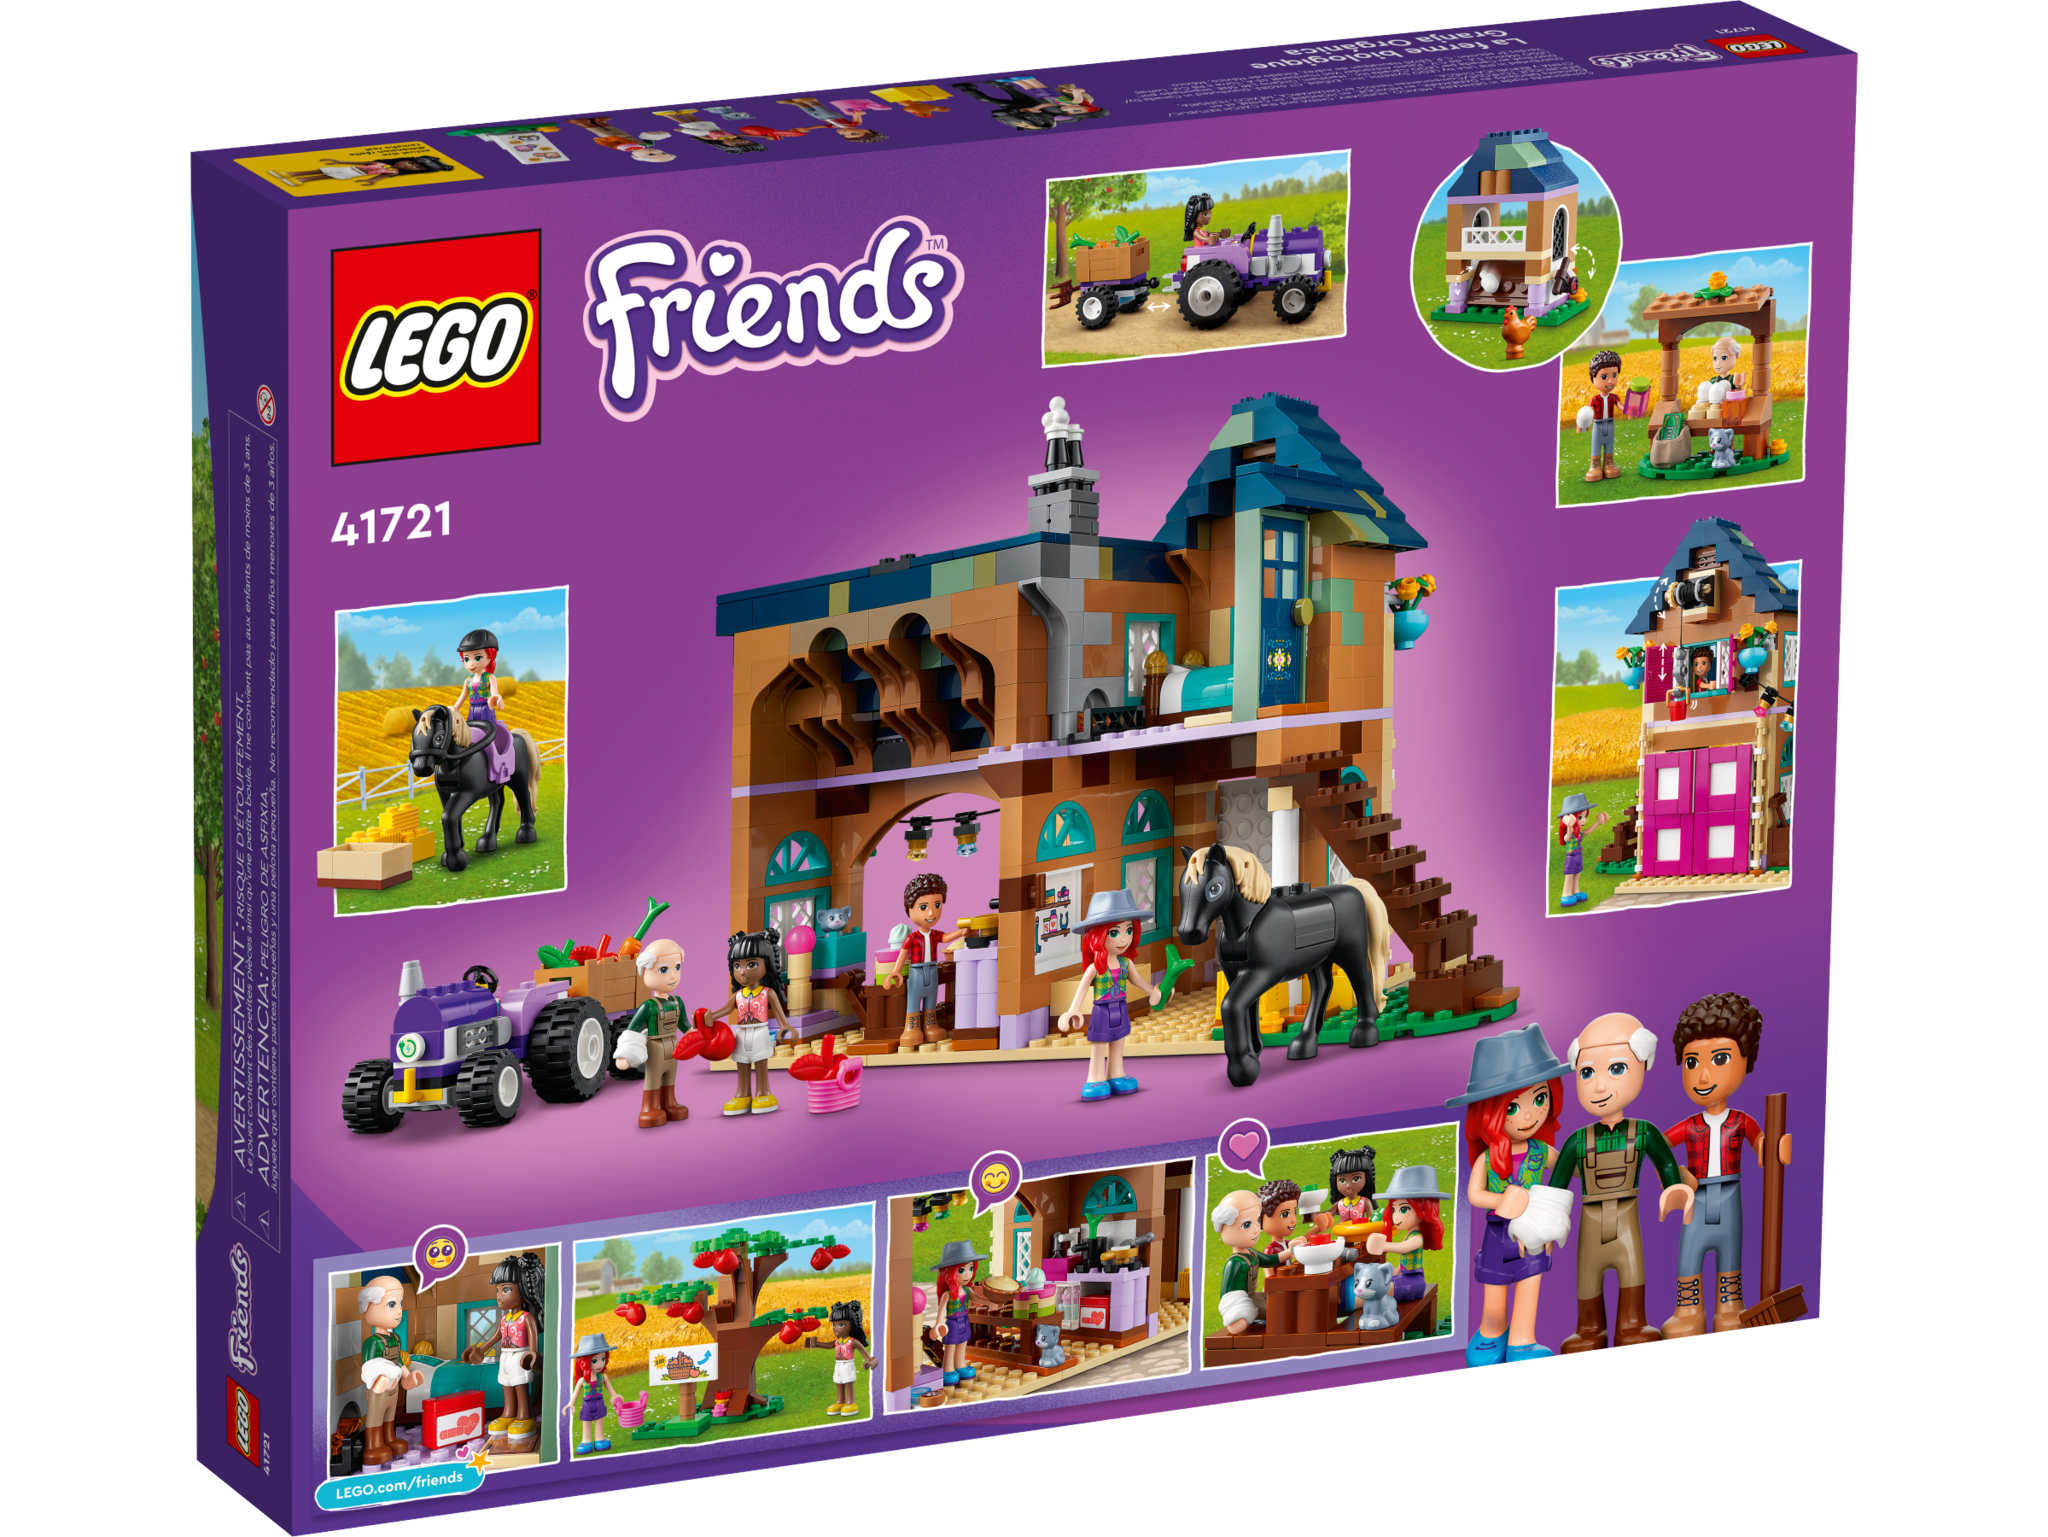 Lego Lego 41721 Friends - La ferme bio